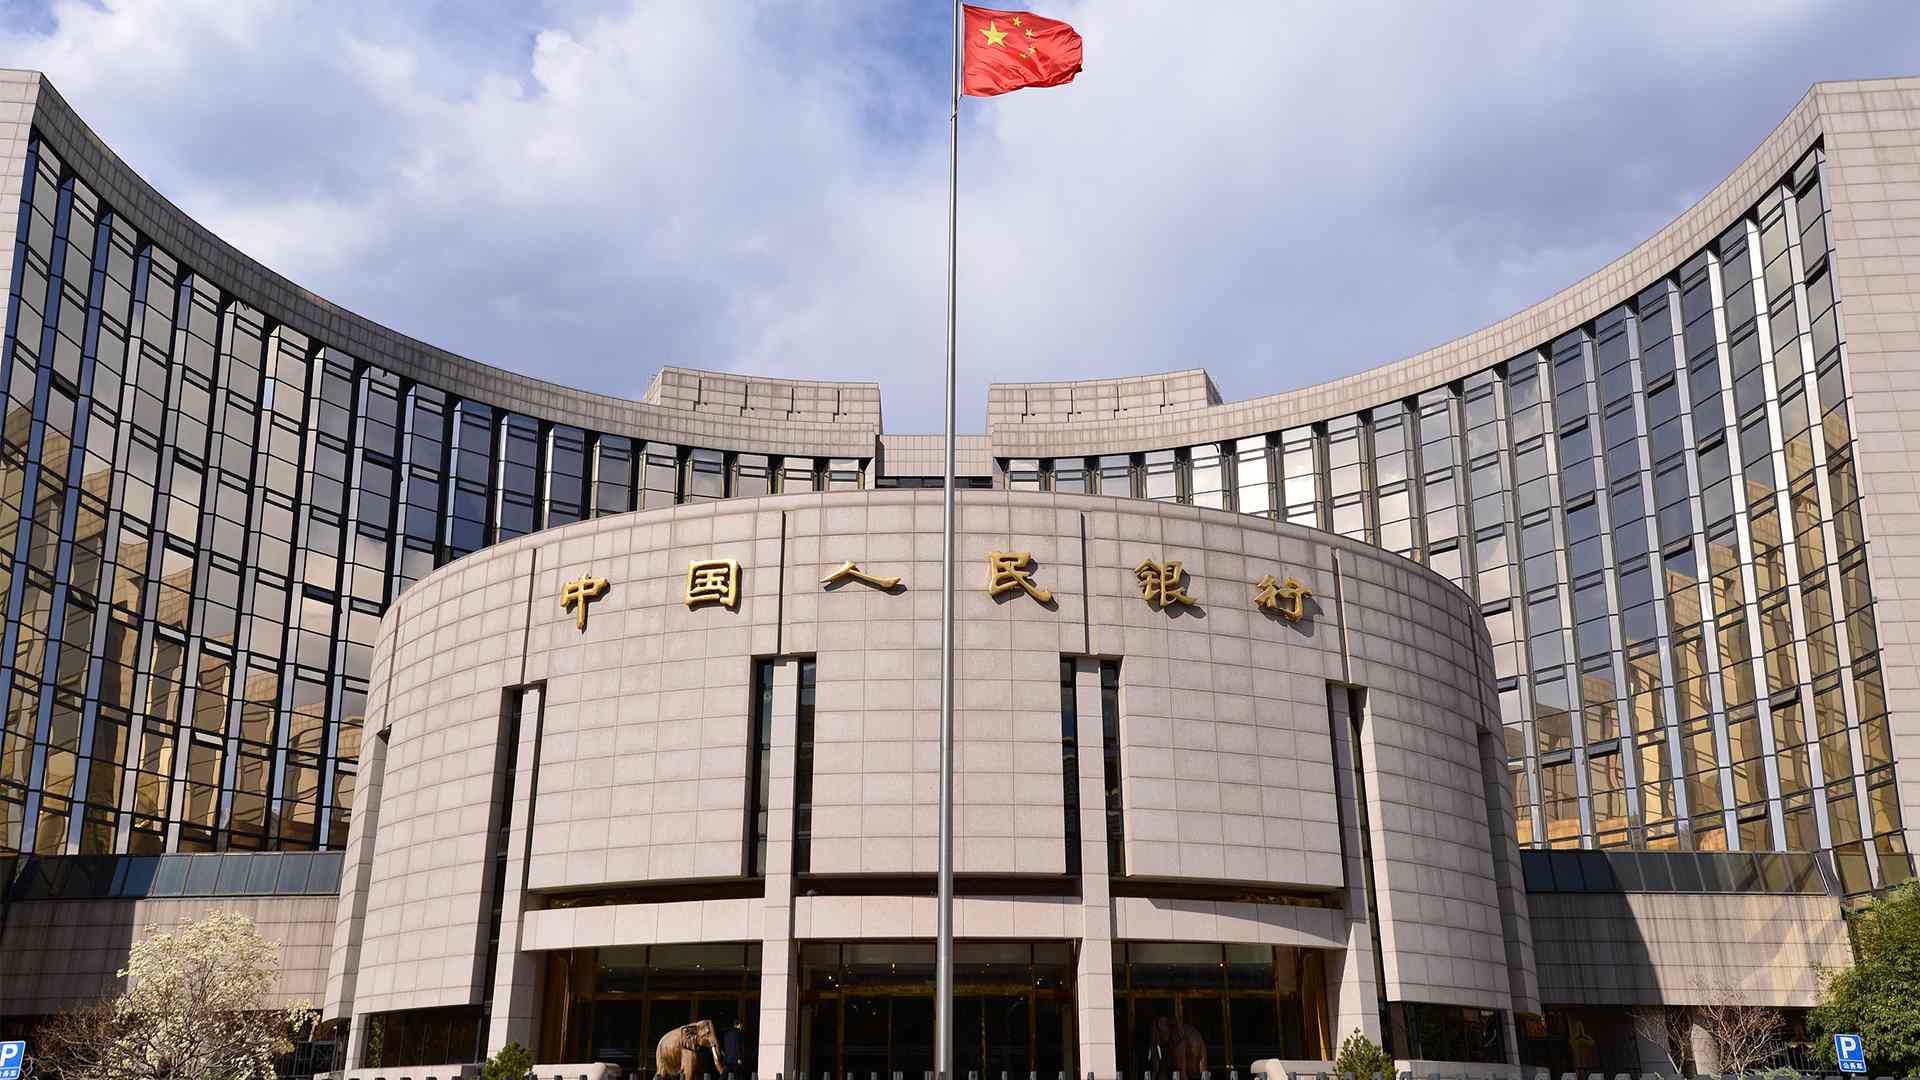 China's Central Bank develops platform for cross-border payments based on digital yuan